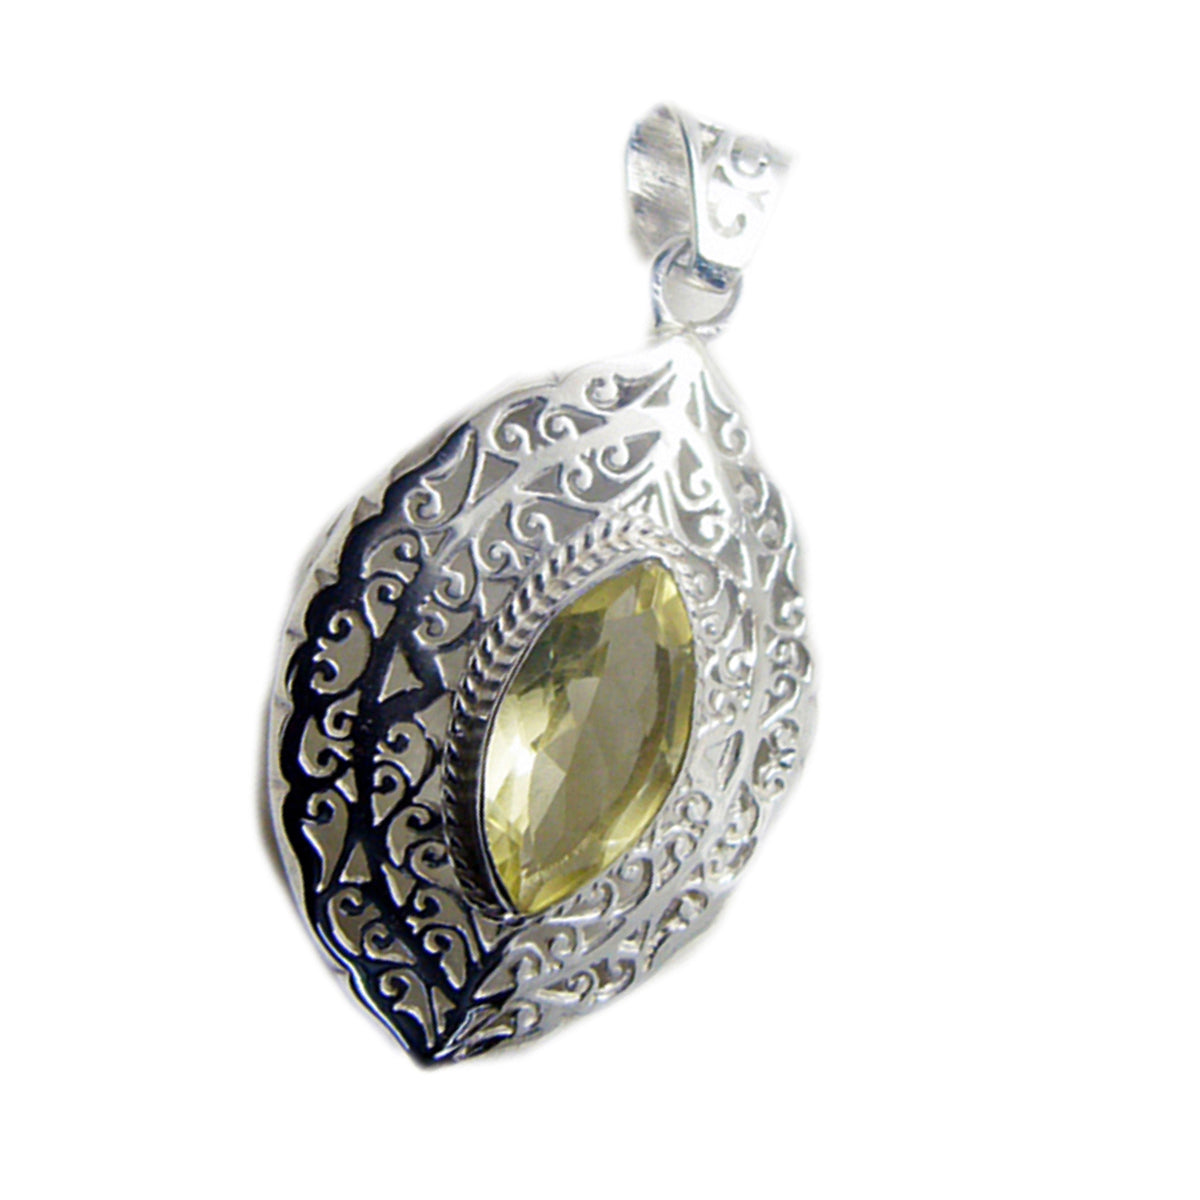 Riyo Charming Gems Marquise Faceted Yellow Lemon Quartz Silver Pendant Gift For Wife